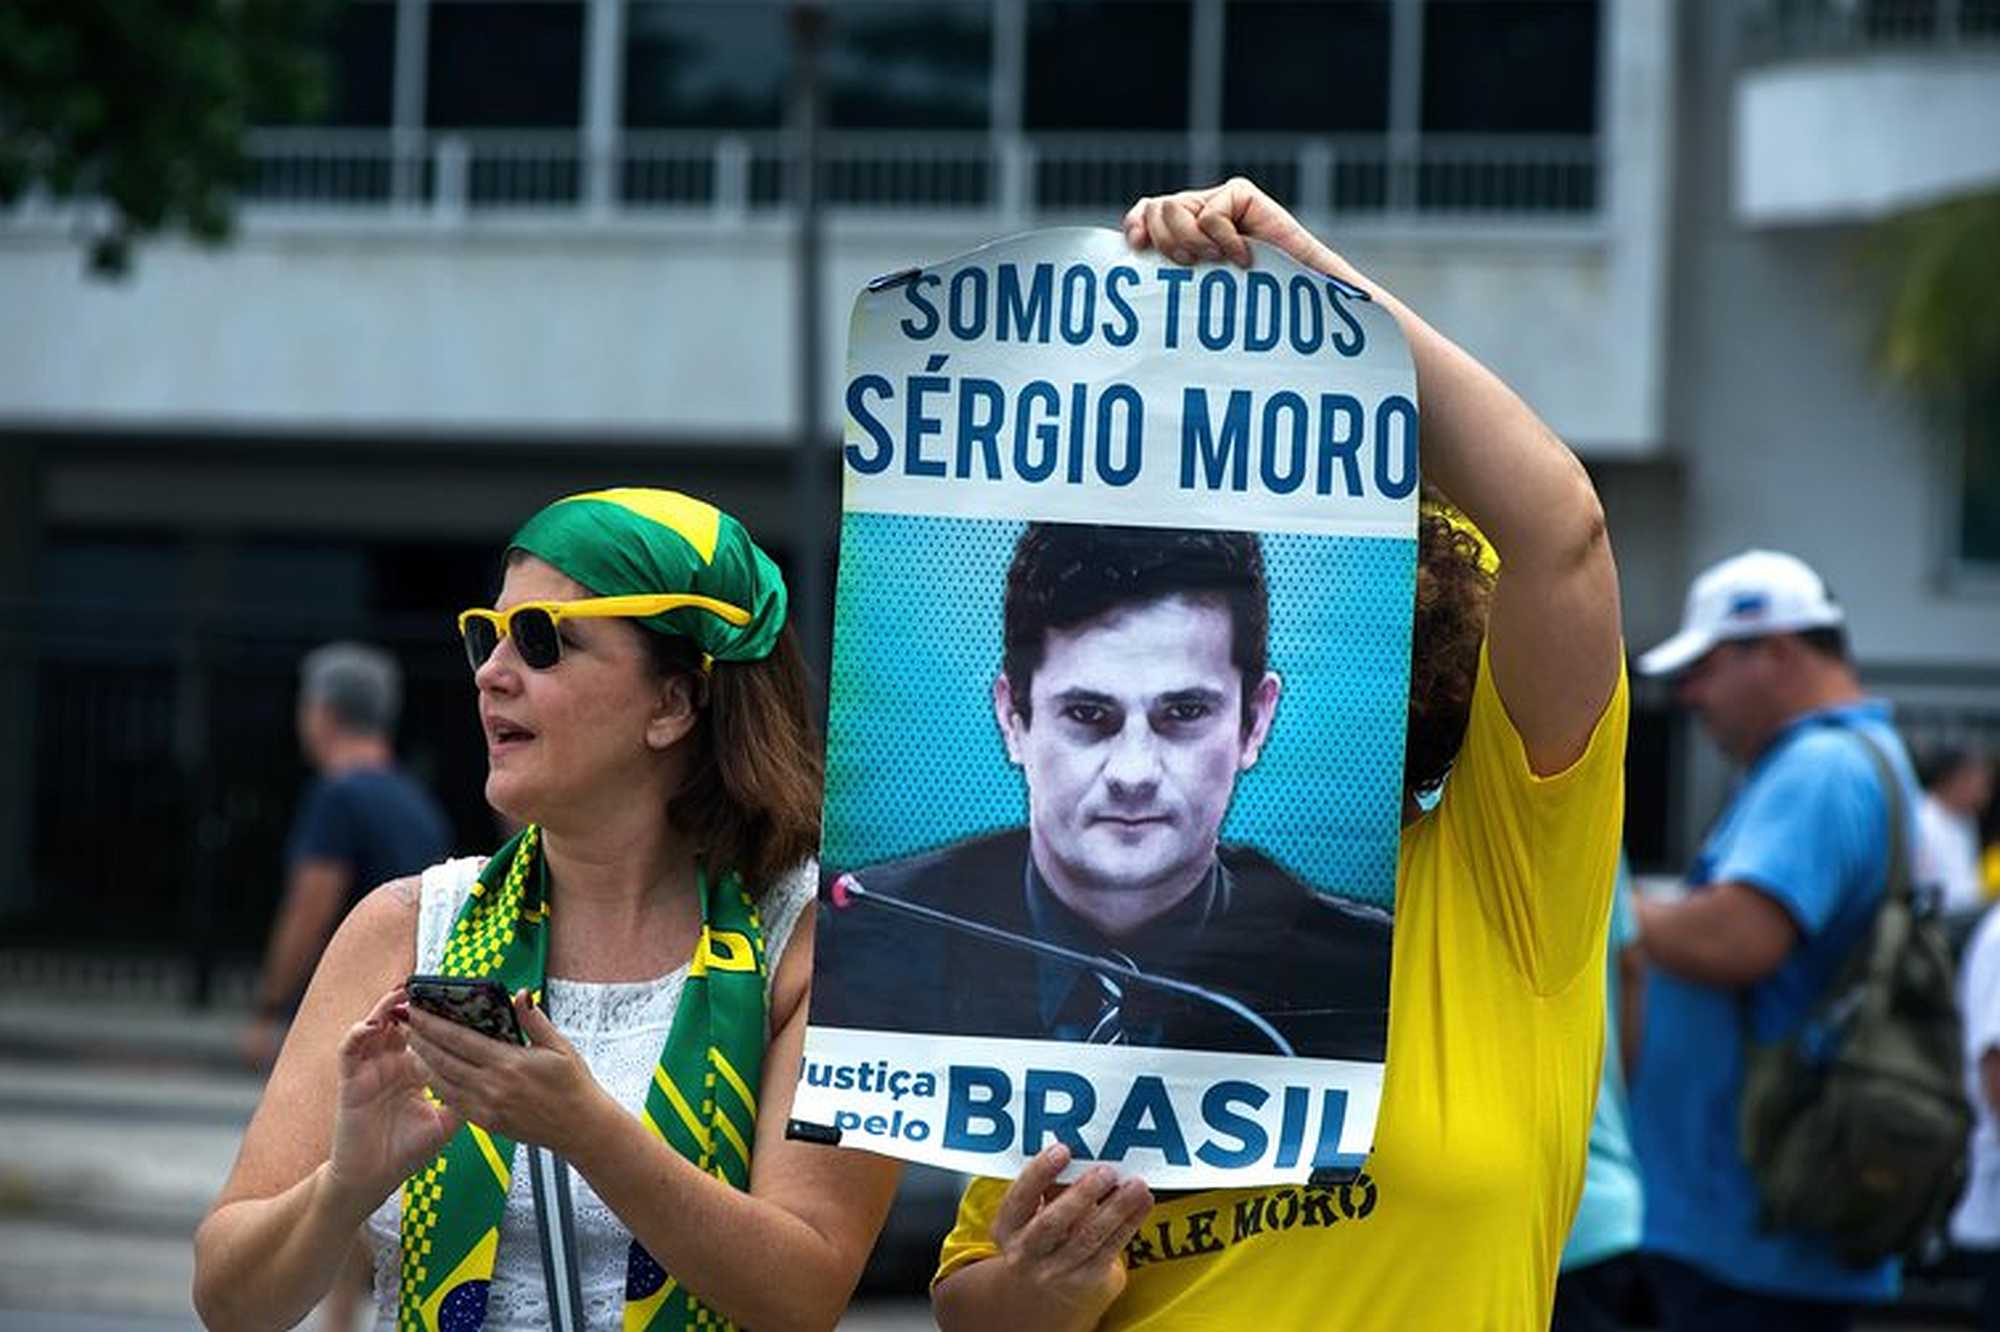 A survey indicates that 57% of Brazil's population considers Lula's criminal convictions fair. | Cintia Erdens Paiva/Alamy Stock Photo